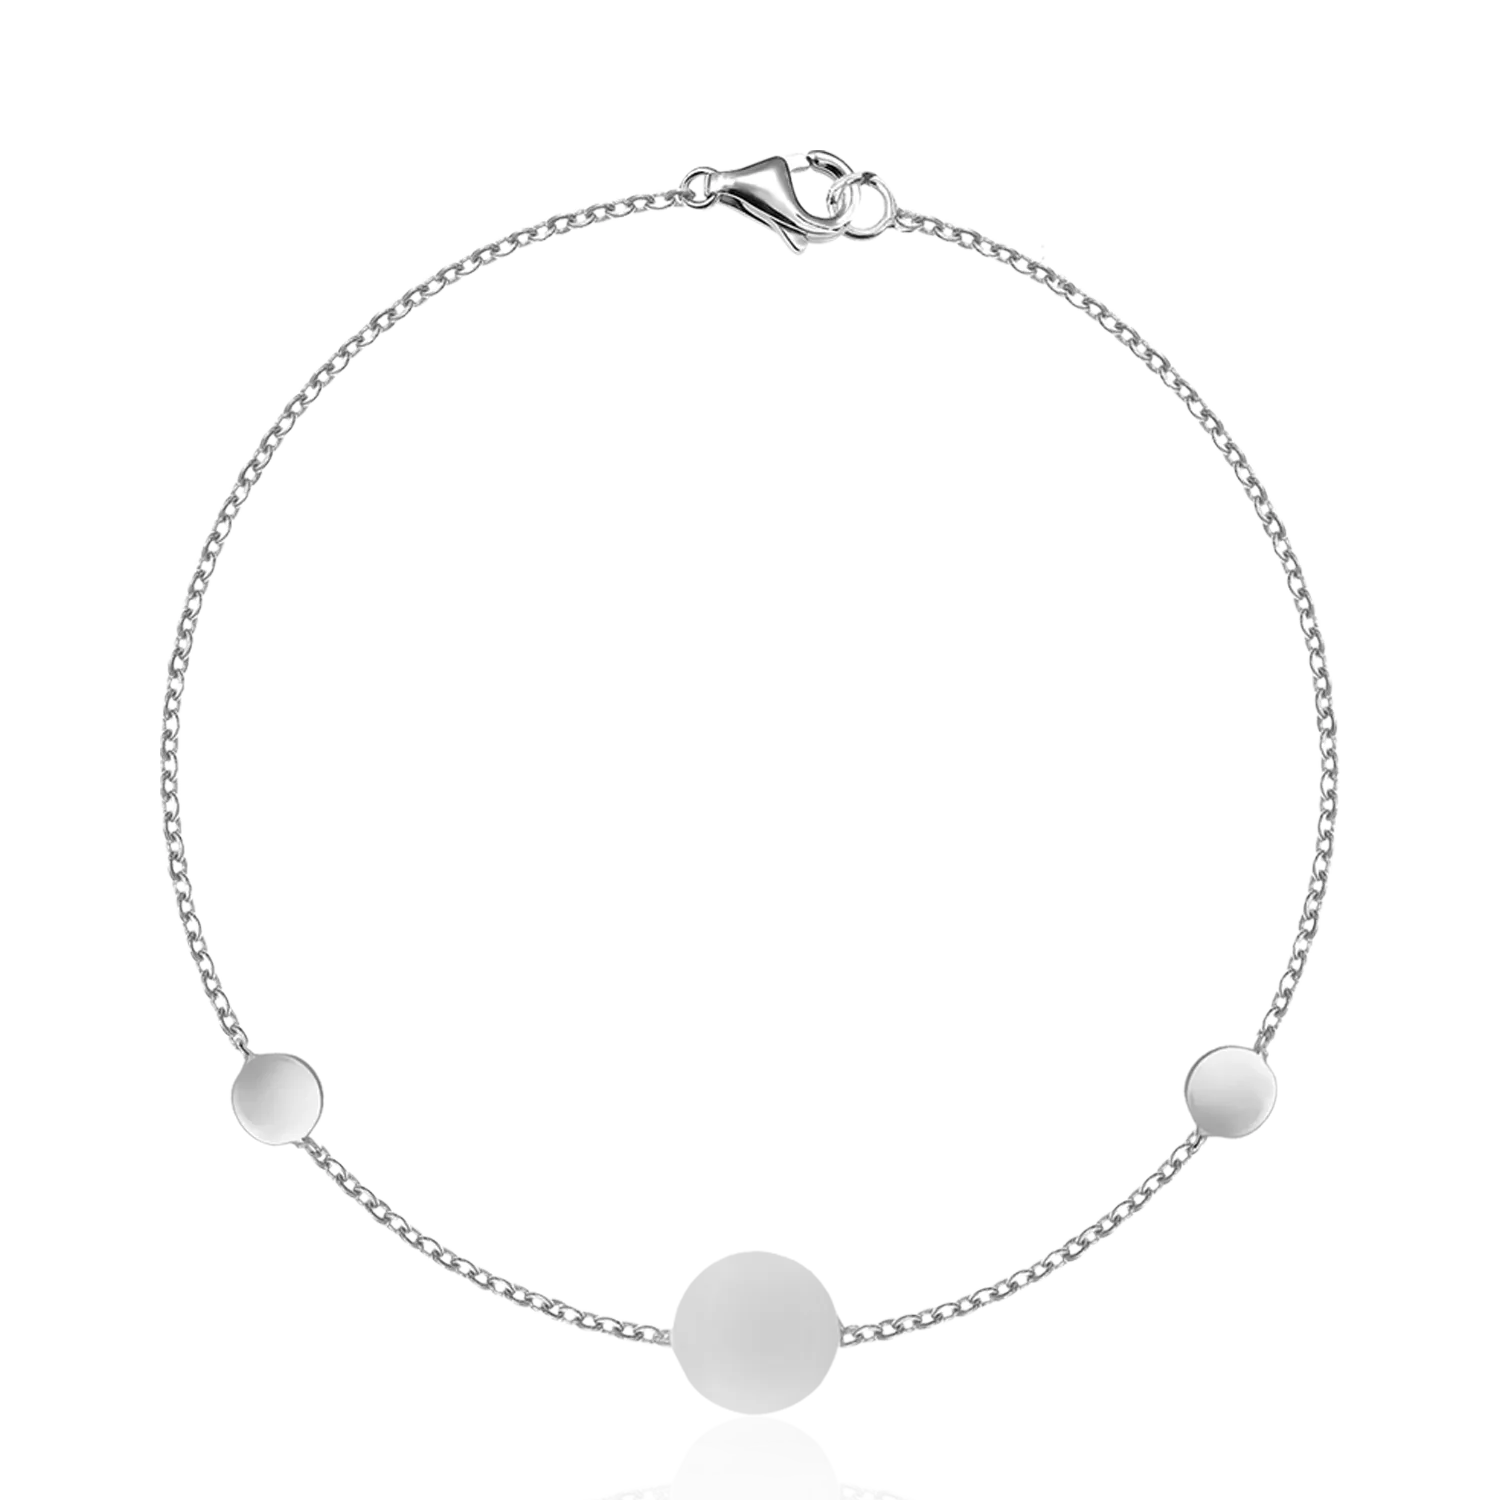 White gold bracelet with round pendant